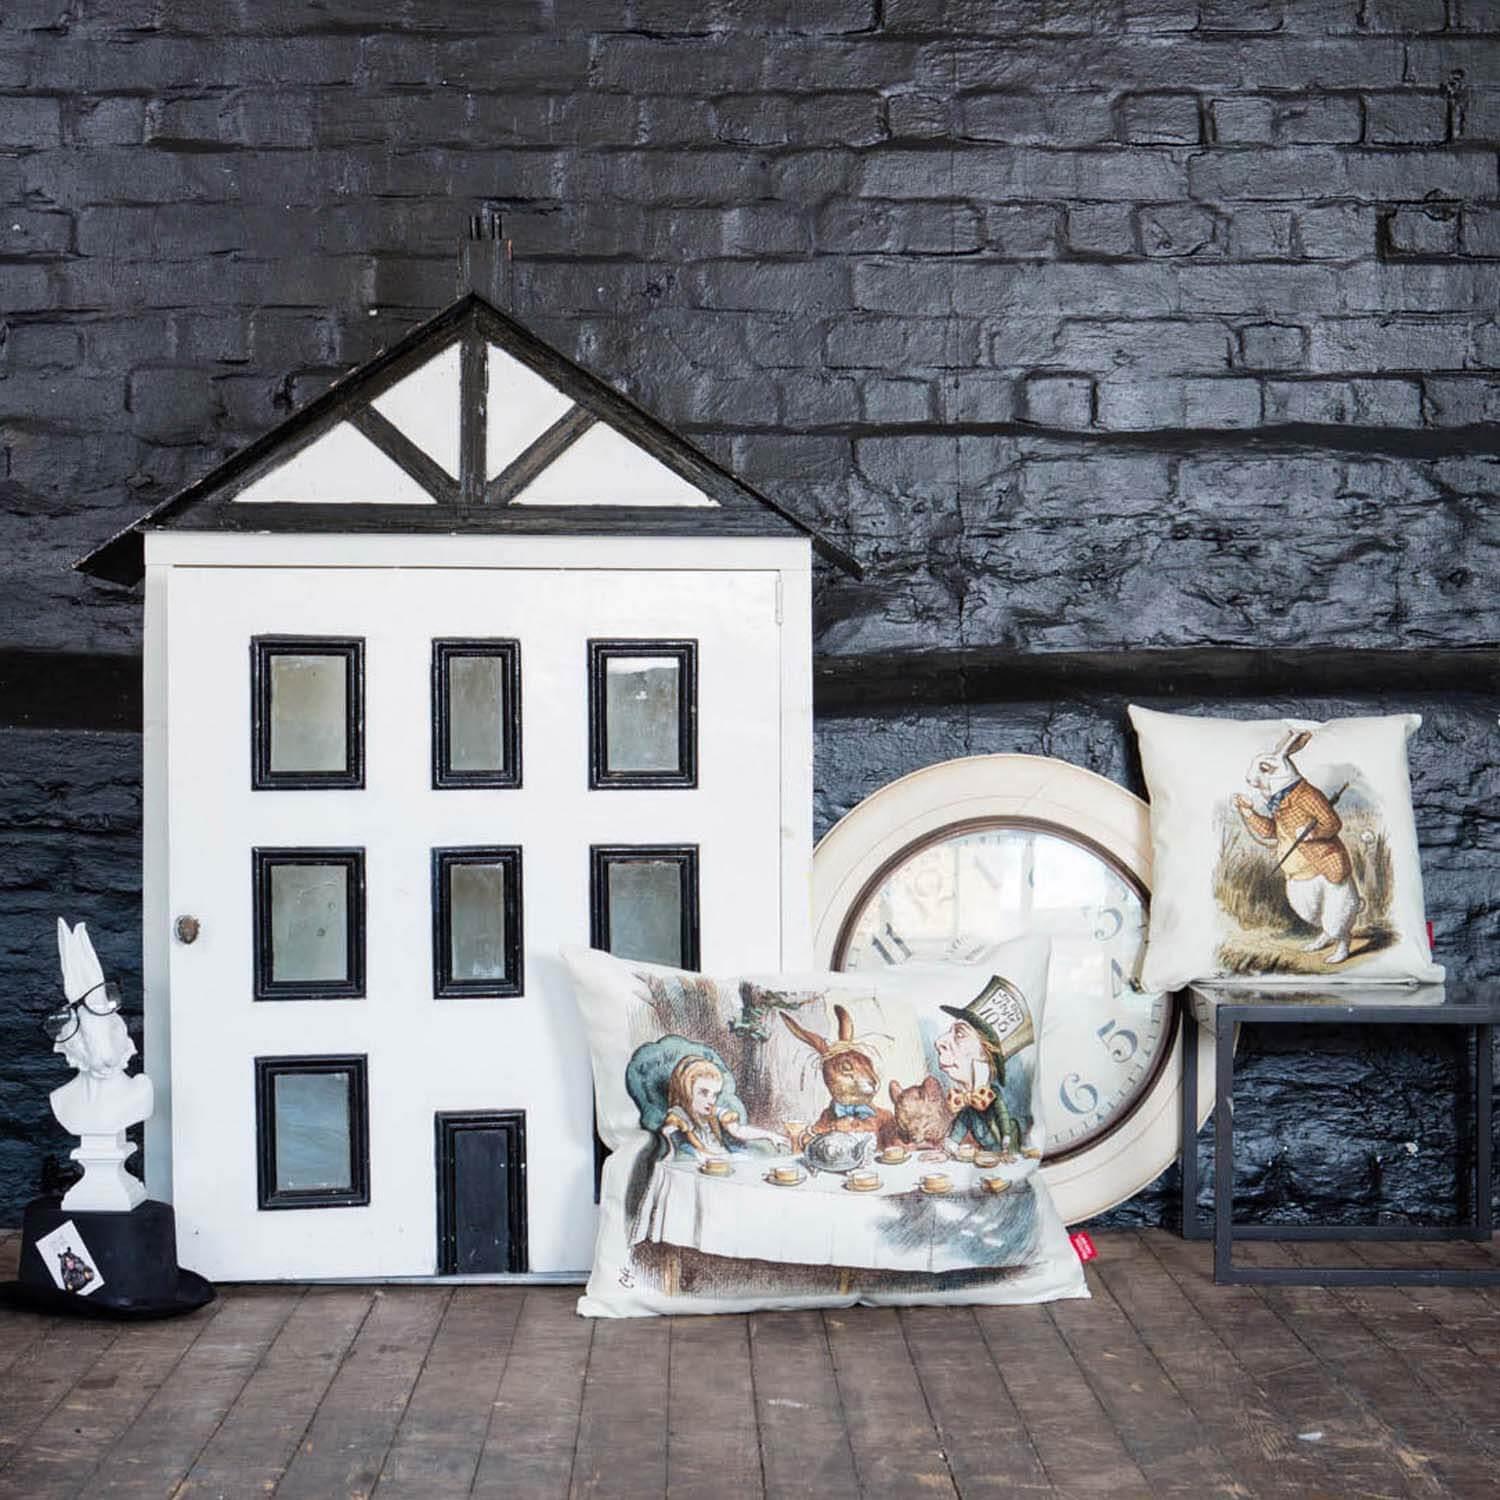 Inspecting Tarts - Alice in Wonderland - Lewis Carroll Cushion - Handmade Cushions UK - WeLoveCushions